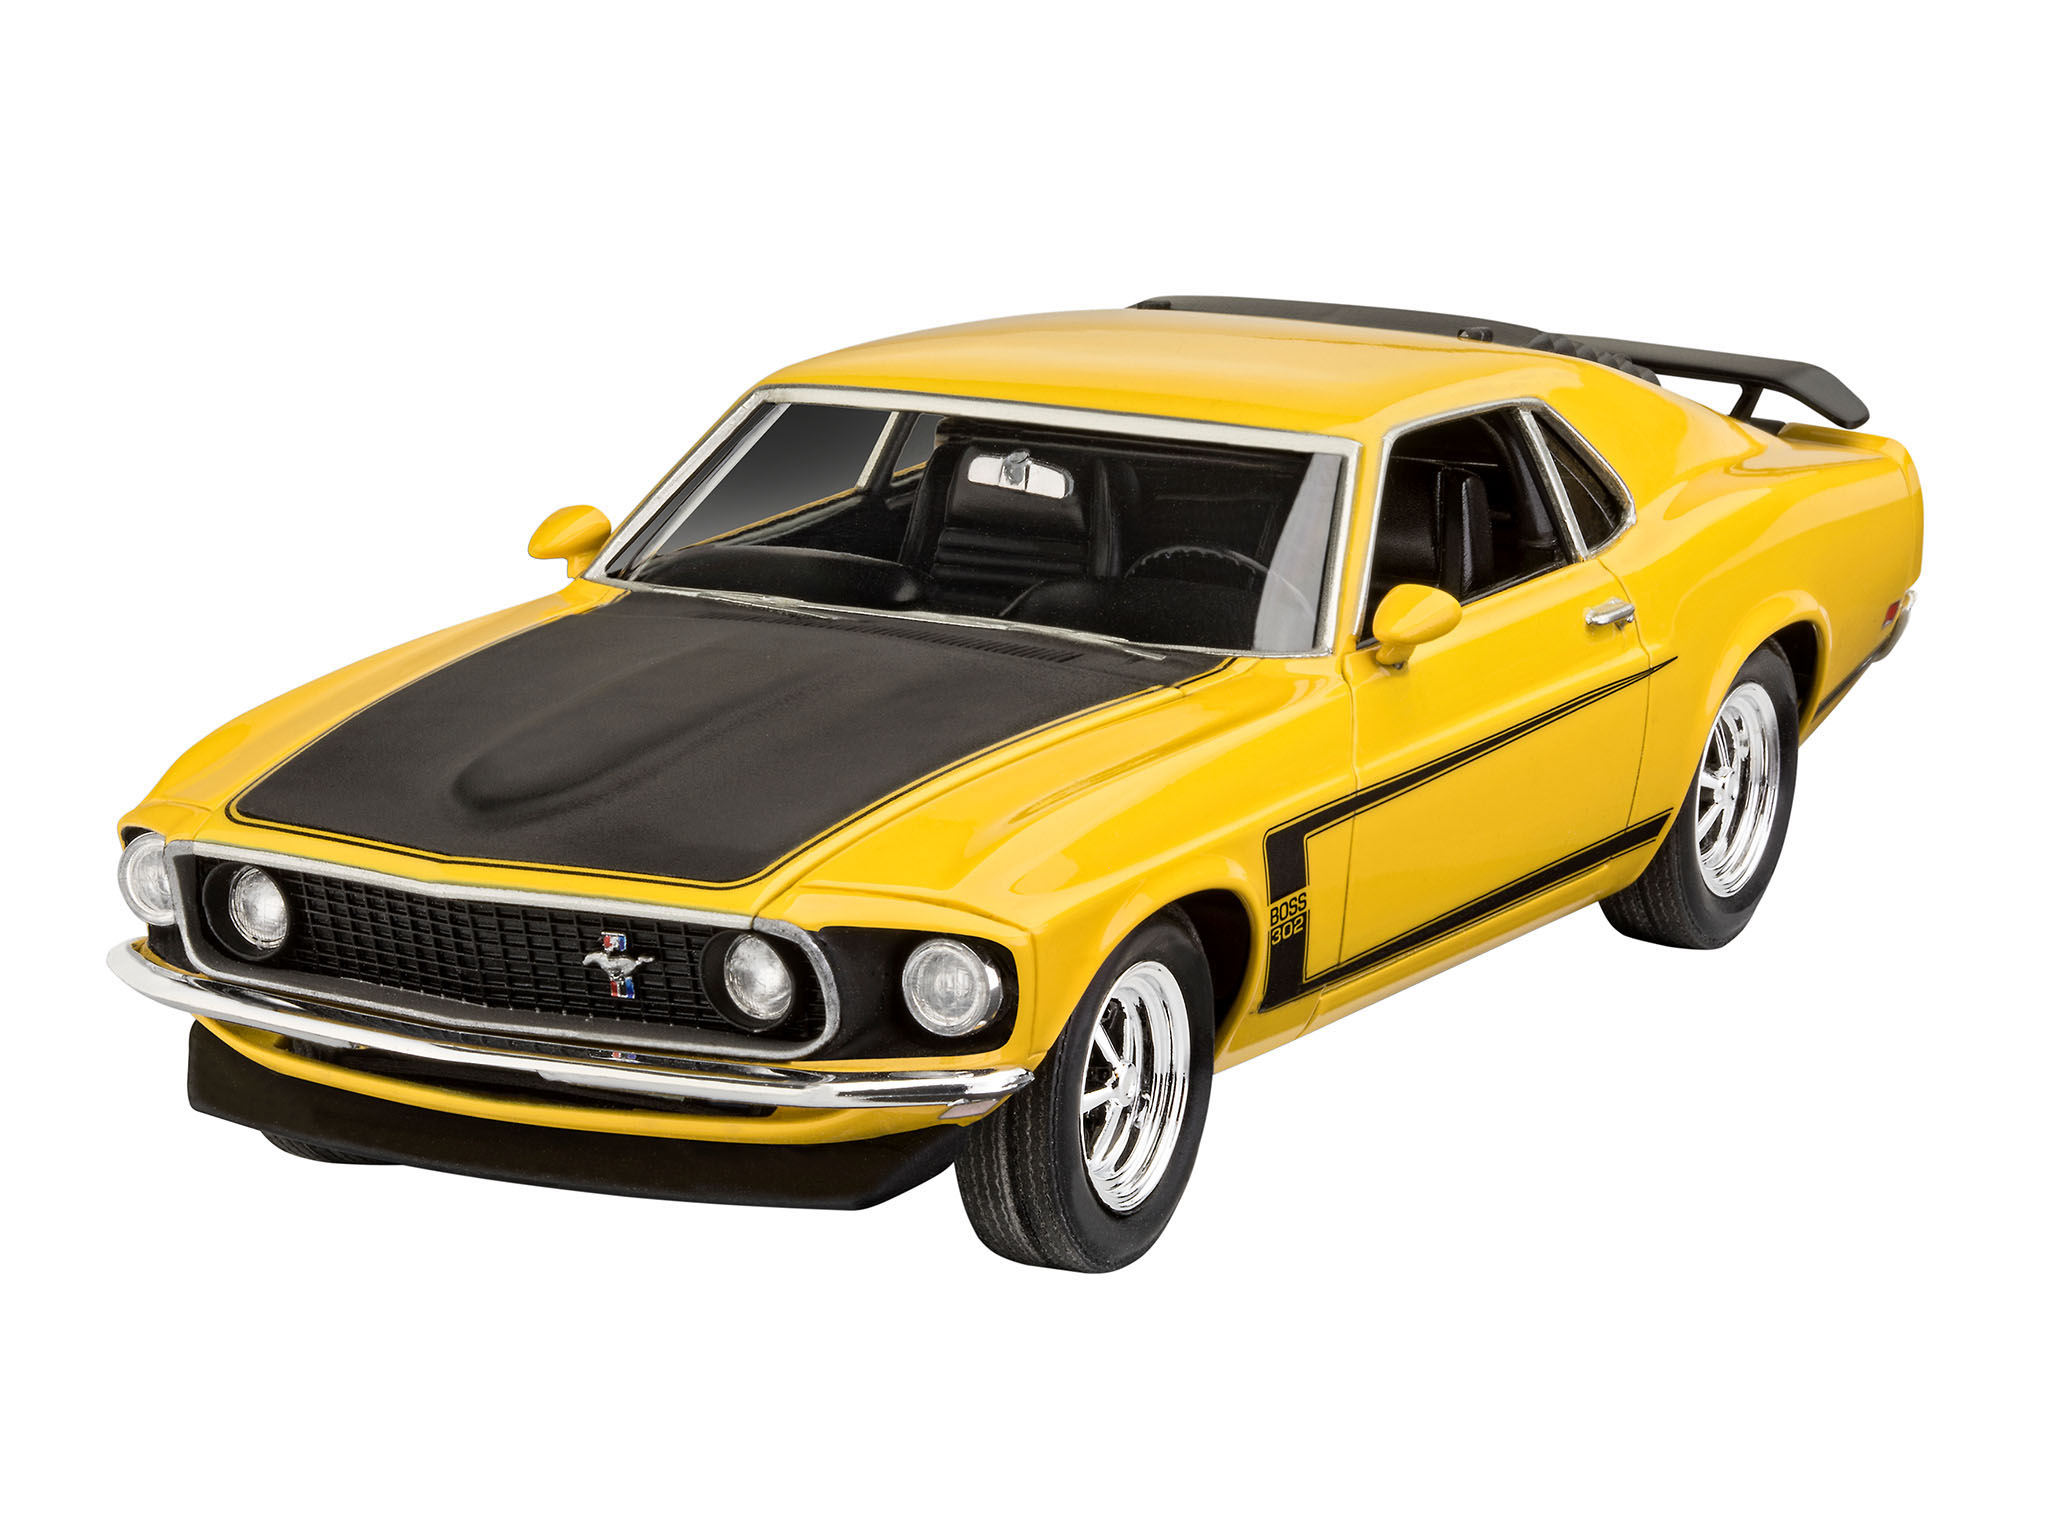 1969 Boss 302 Mustang - 07025